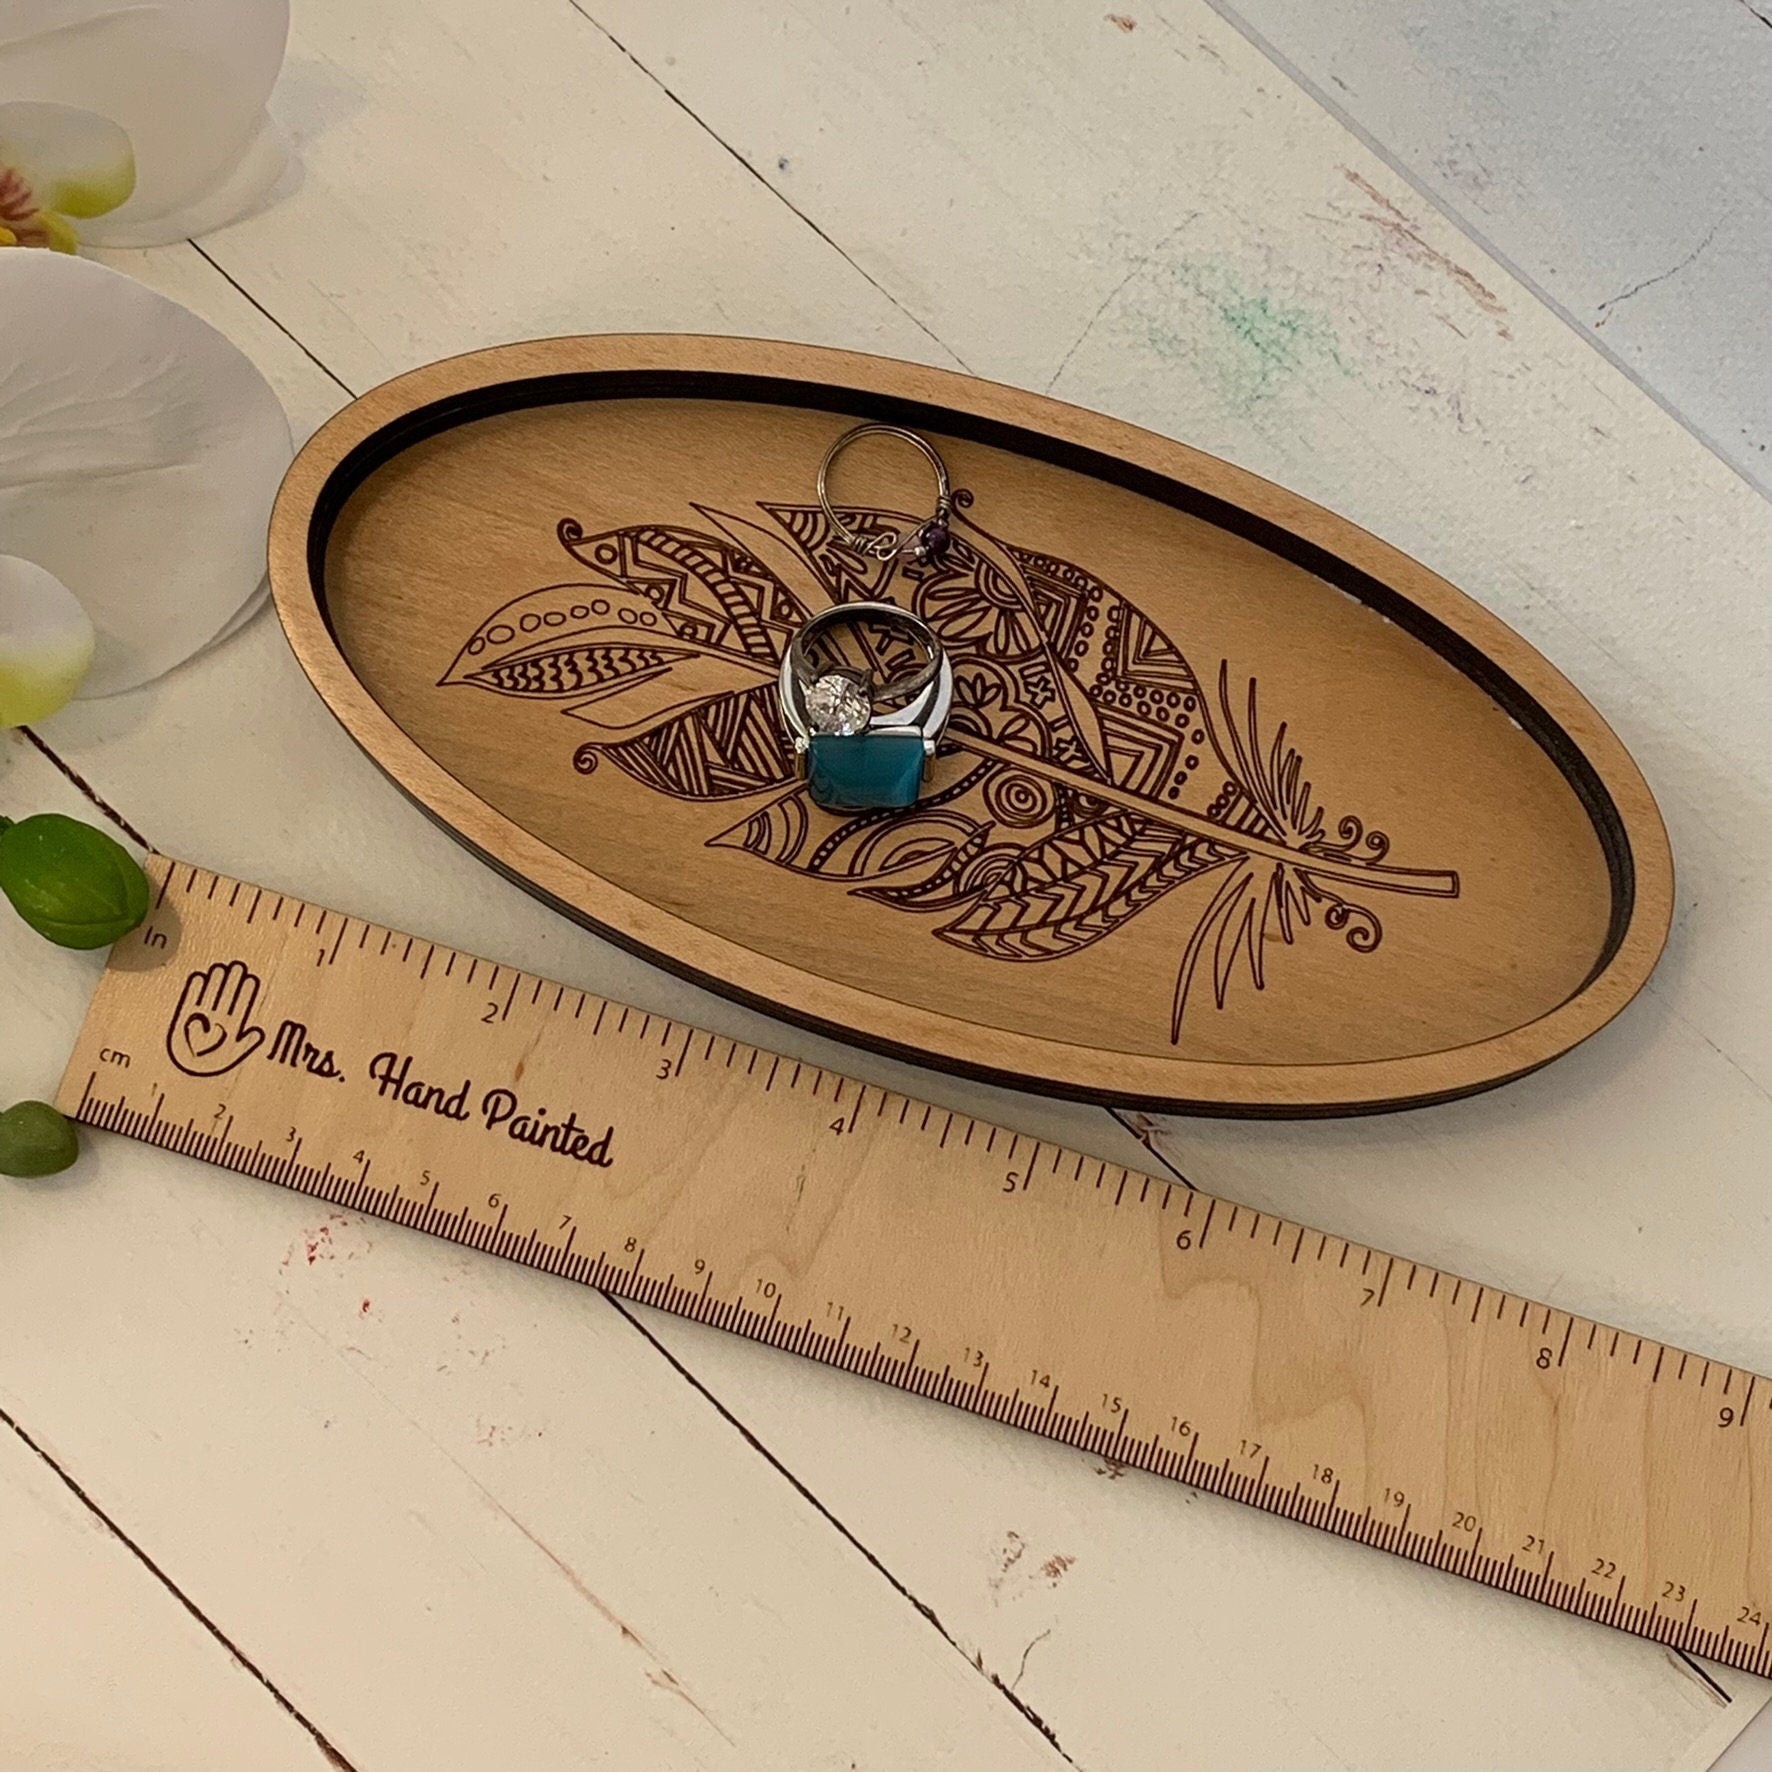 Laser Engraved Wood Boho Feather Oval Shaped Trinket Tray - Valet Tray / Ring Dish